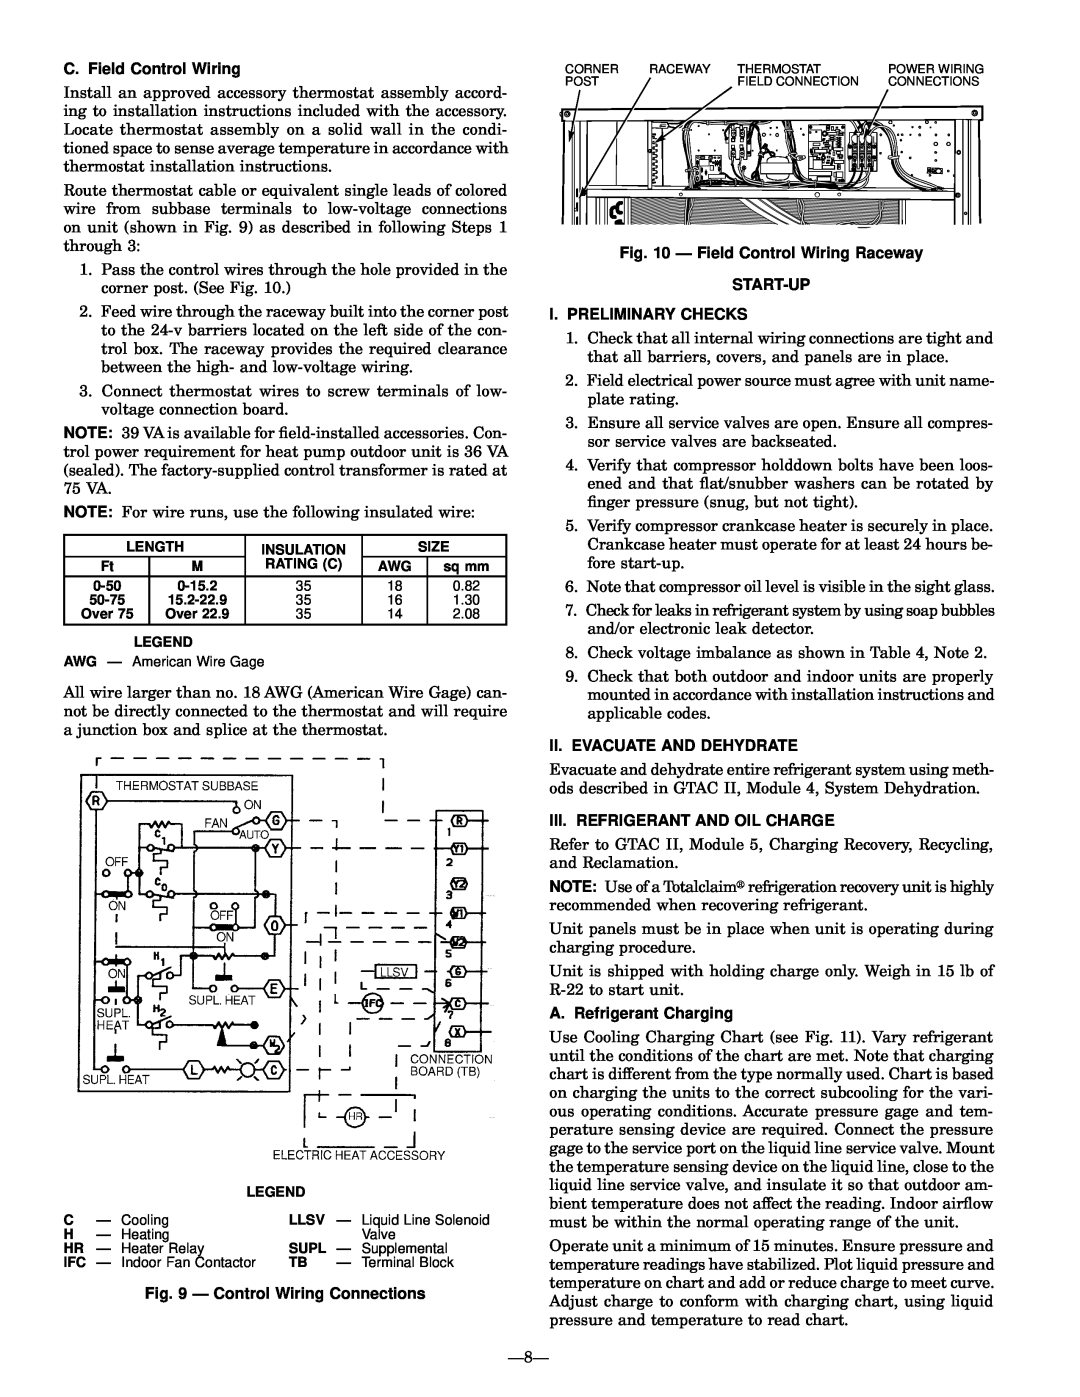 Bryant 575A C. Field Control Wiring, Ð Field Control Wiring Raceway START-UP, I.Preliminary Checks 